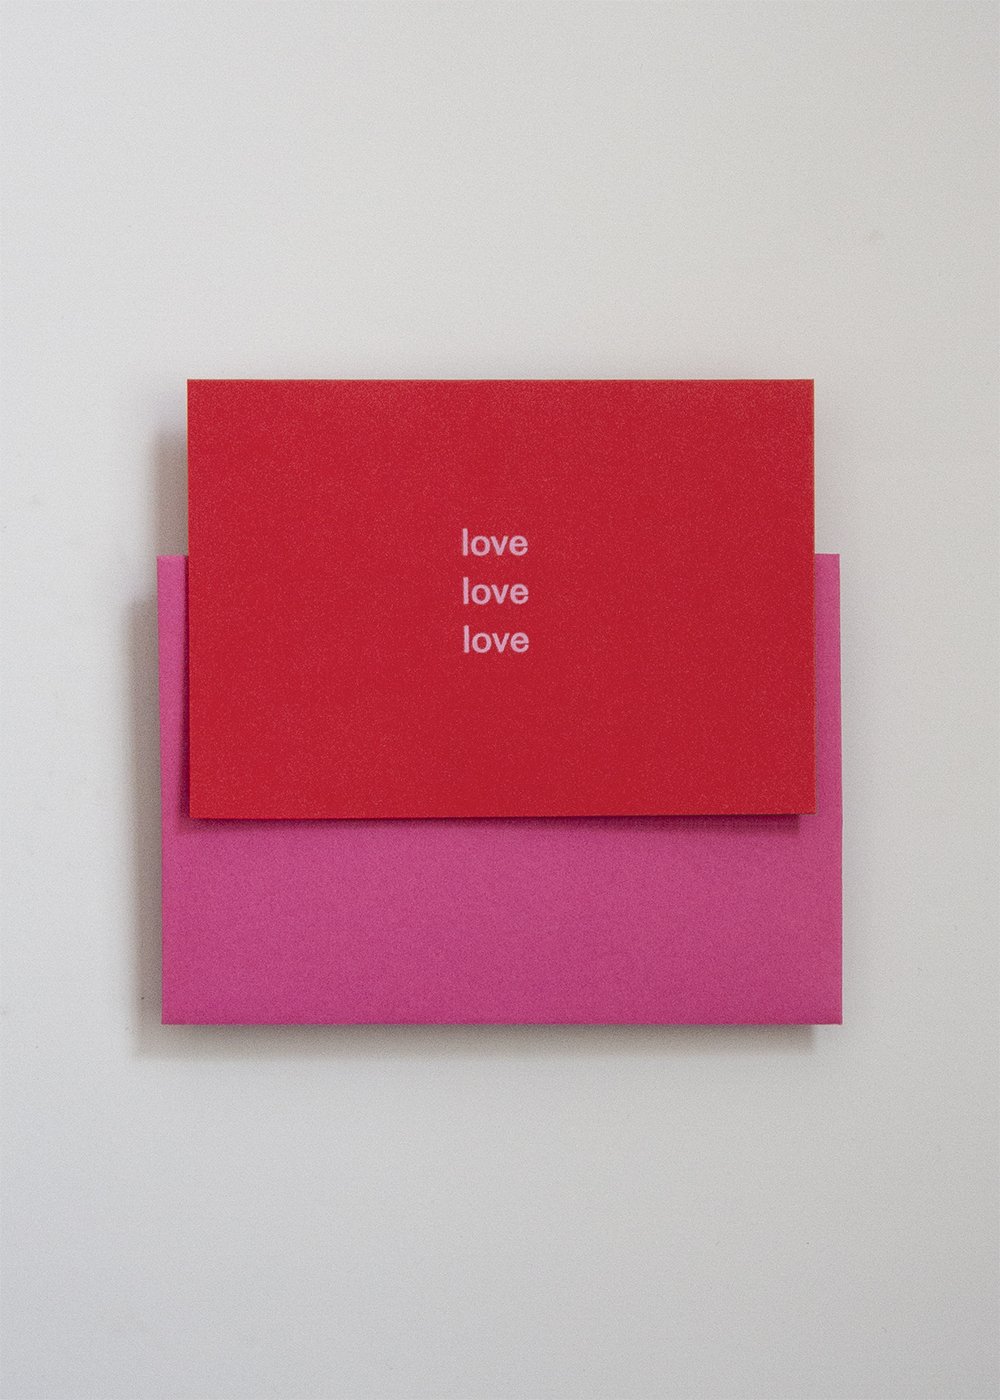 greeting card love love love